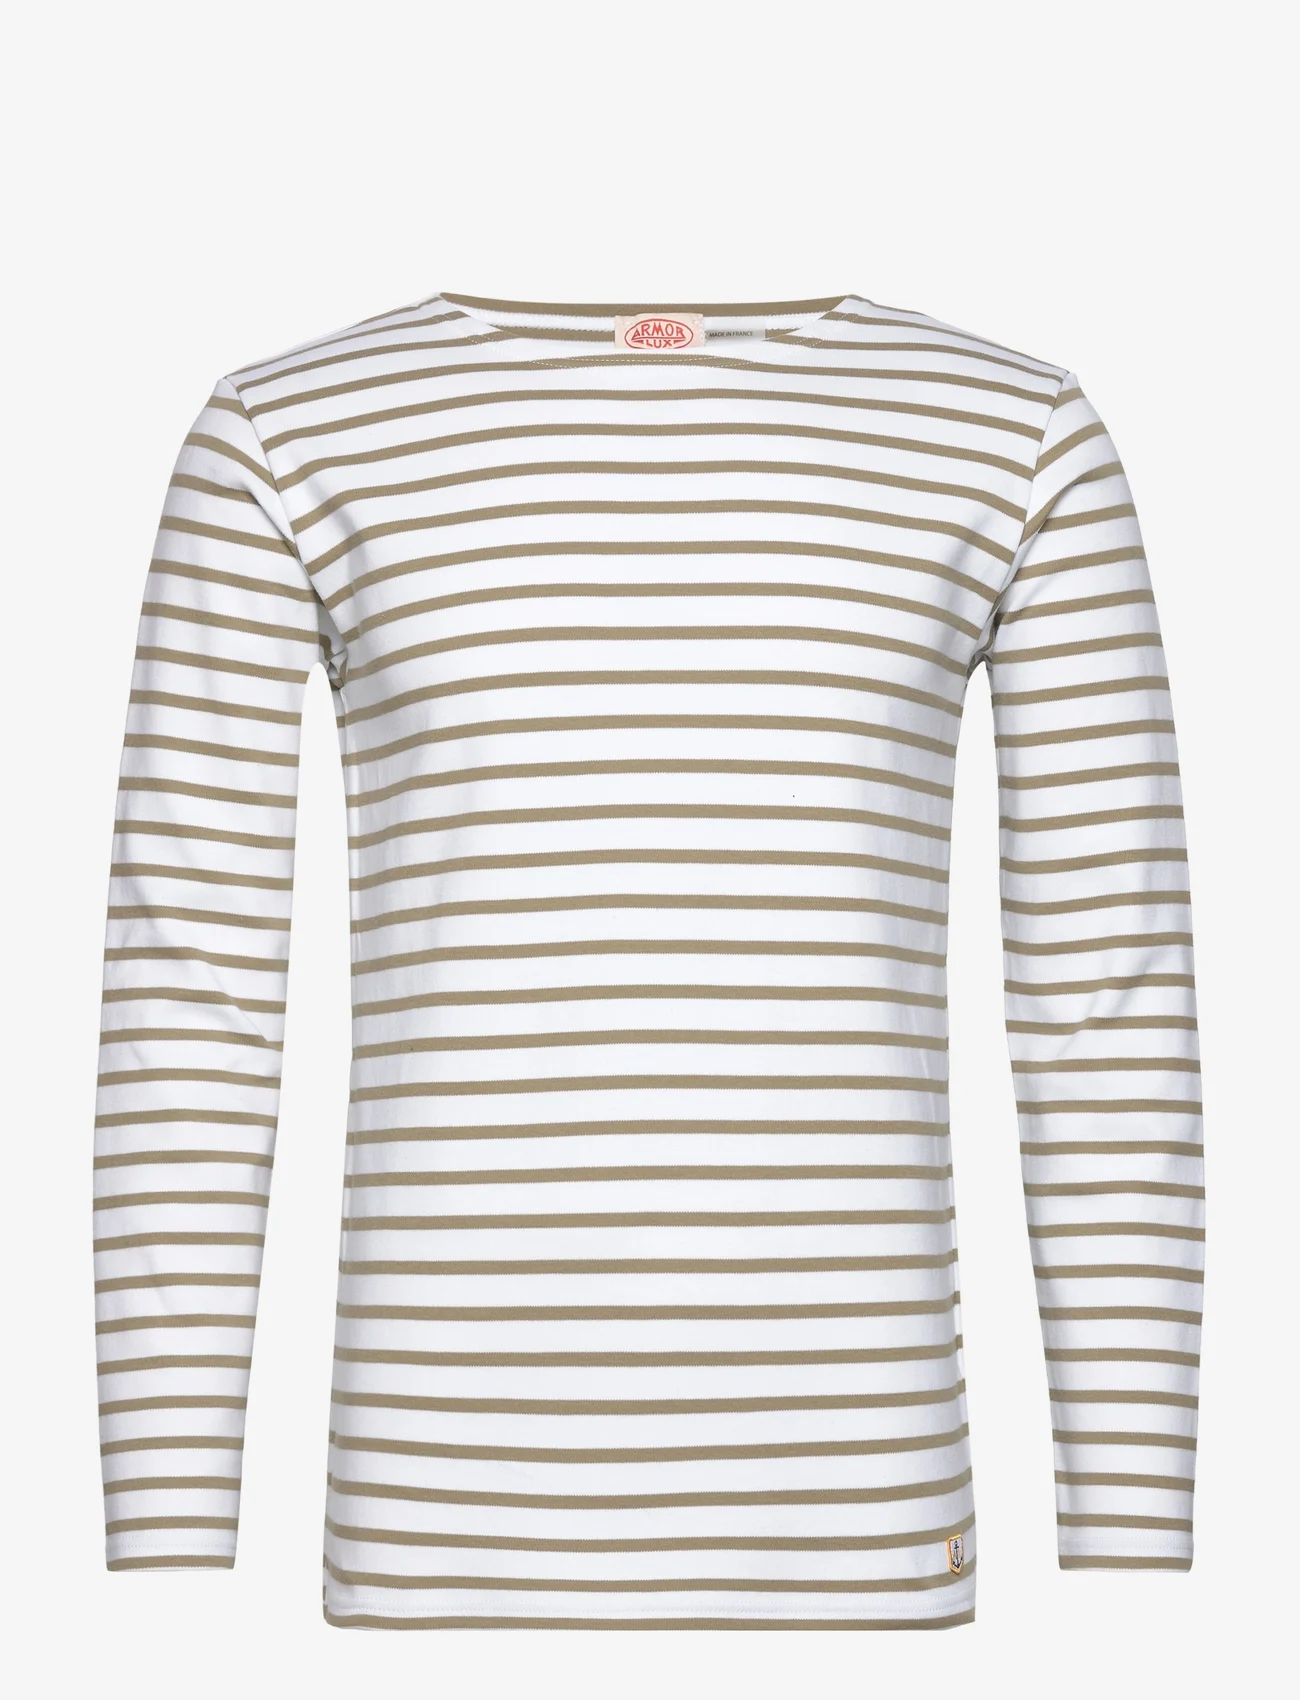 Armor Lux - Breton Striped Shirt Héritage - langærmede t-shirts - white/argile e23 - 0